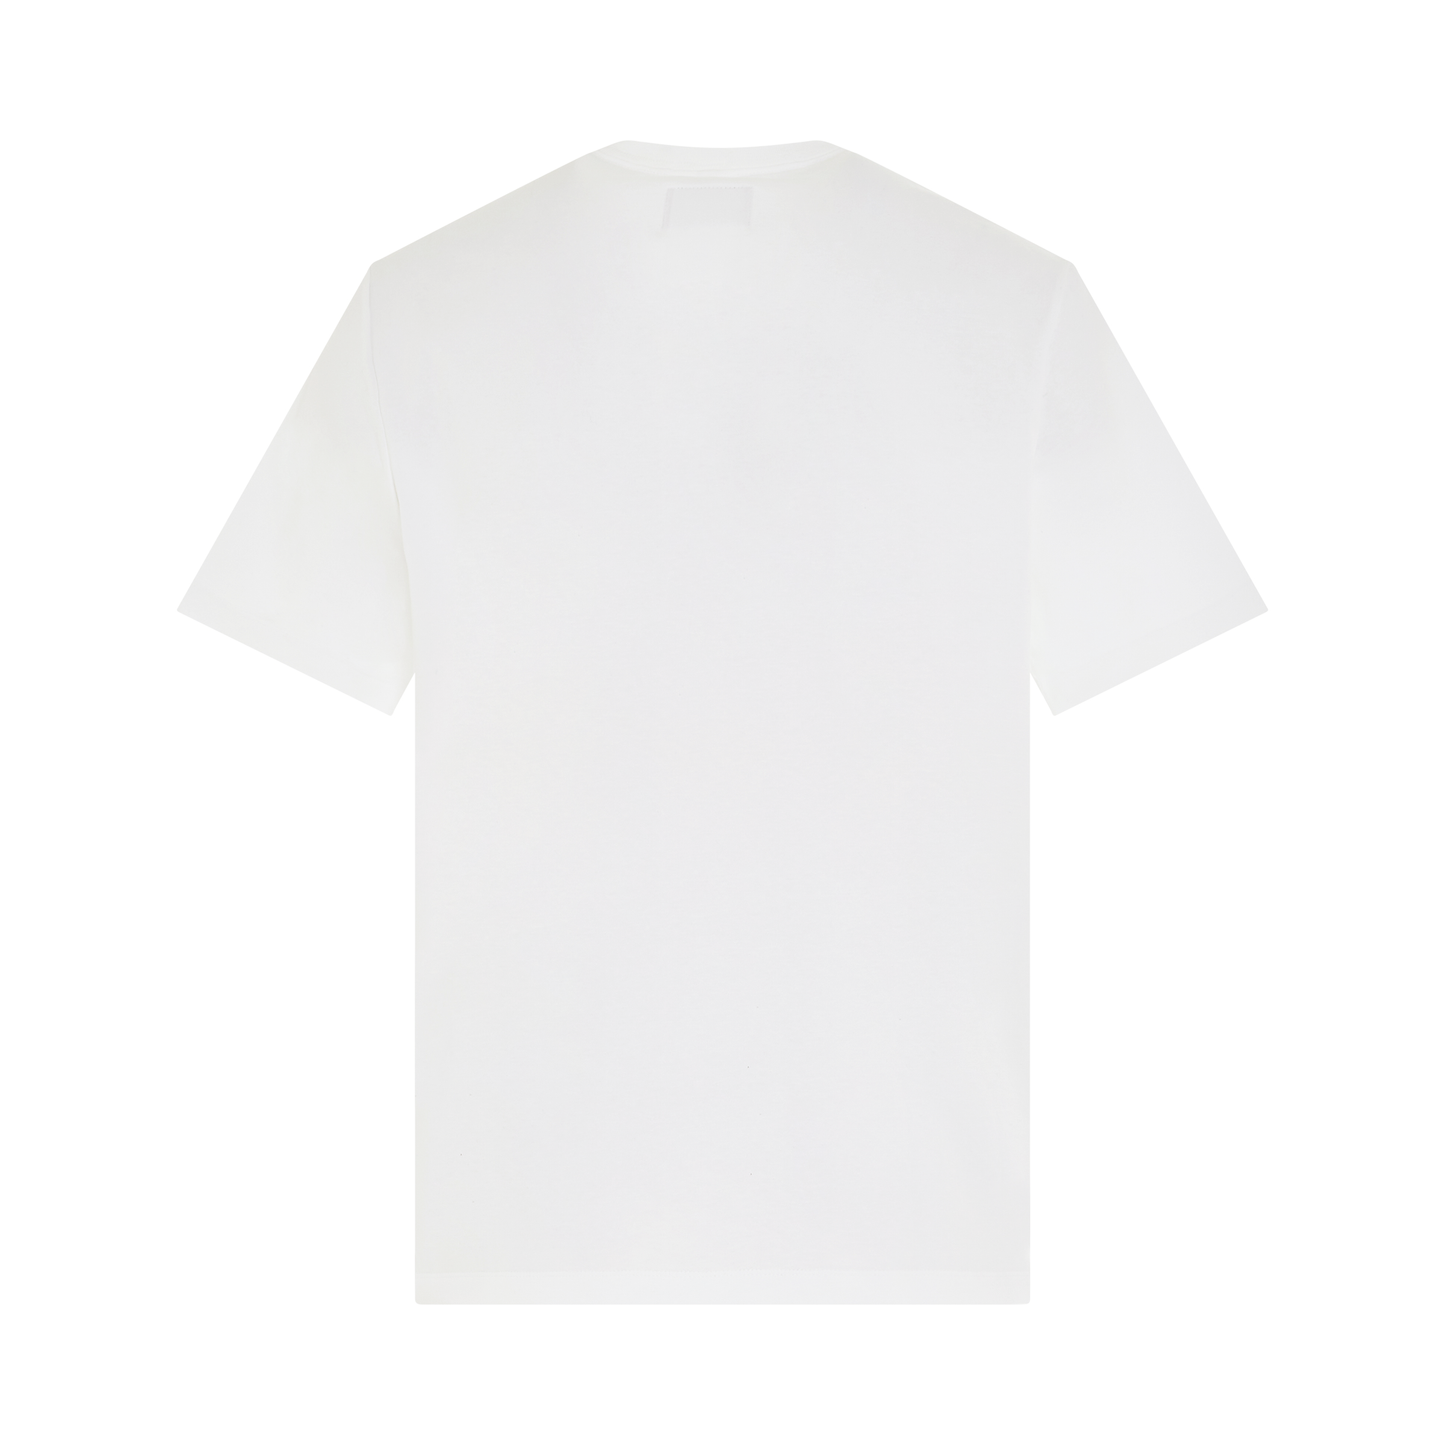 Photo Stitch T-Shirt in White